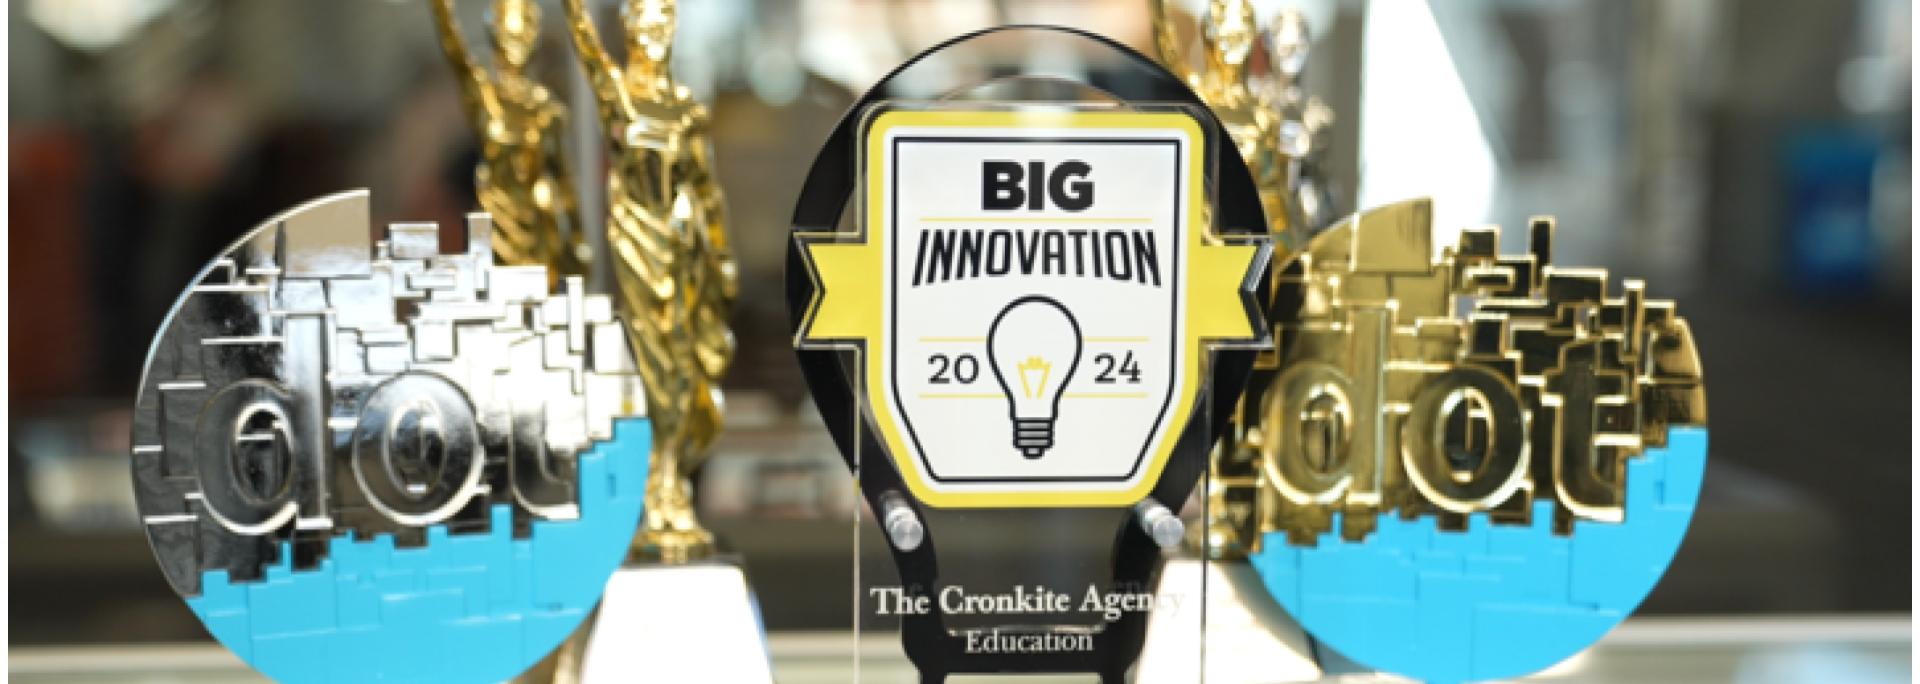 Cronkite Agency BIG Innovation Award